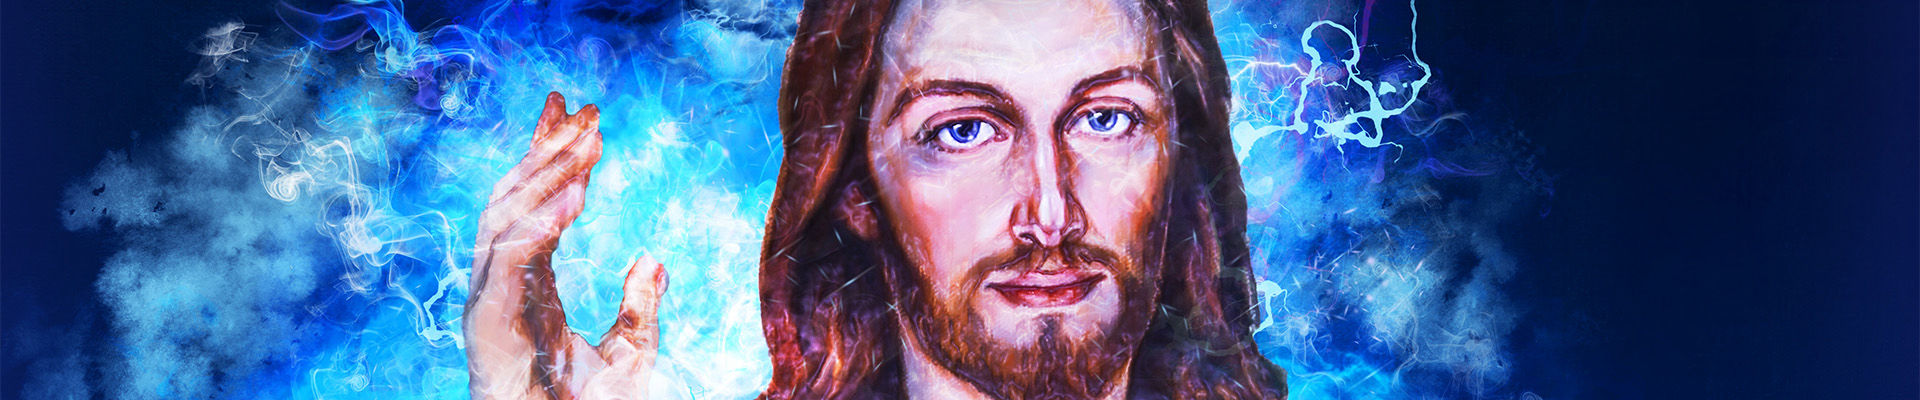 https://pixabay.com/de/illustrations/jesus-religion-glauben-christentum-3692881/